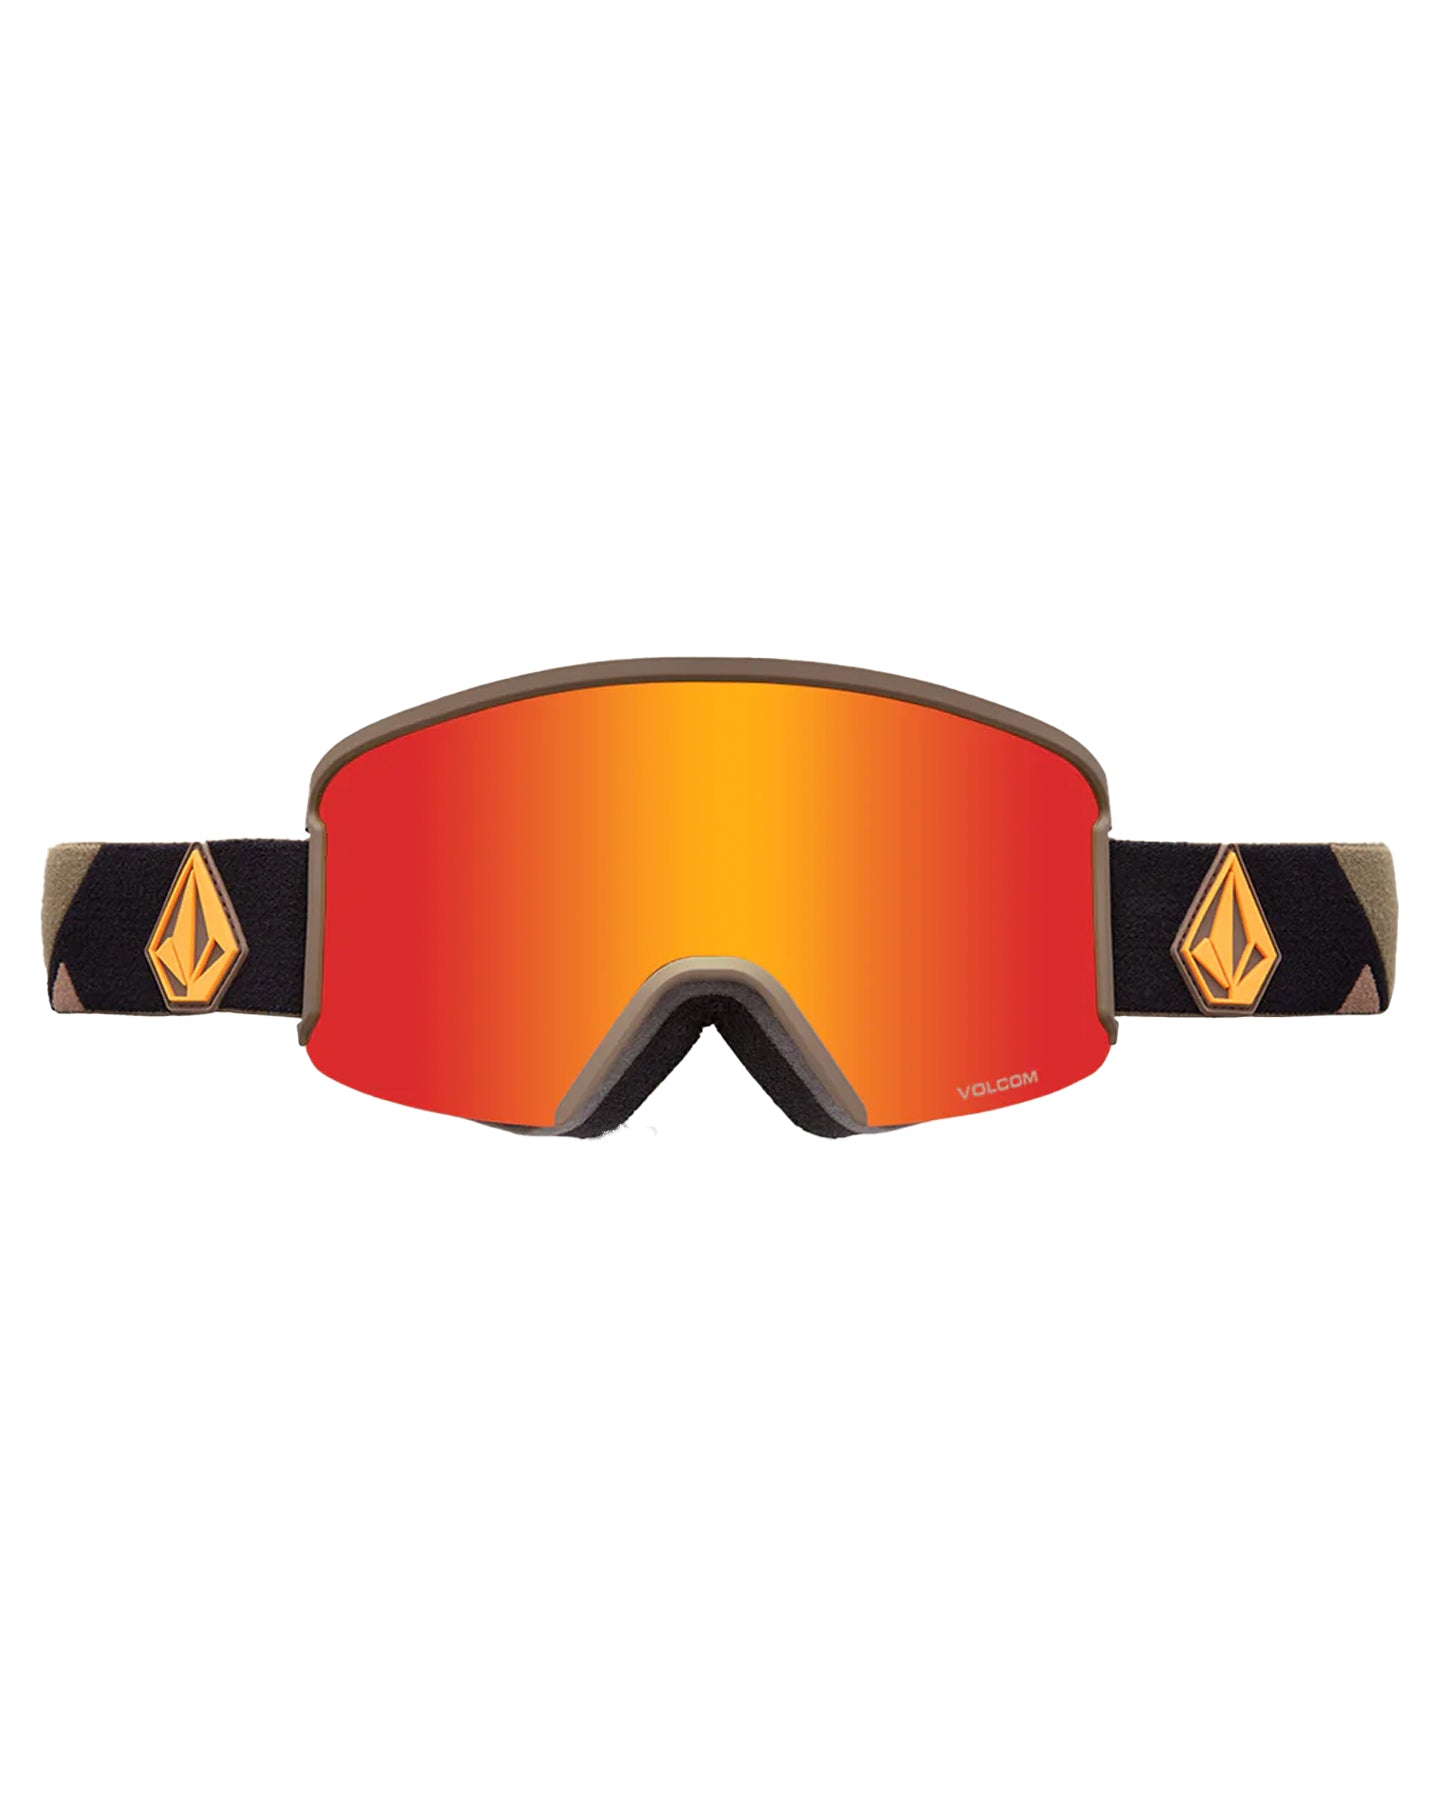 Volcom Garden Military Red Goggles - Red Chrome Men's Snow Goggles - Trojan Wake Ski Snow